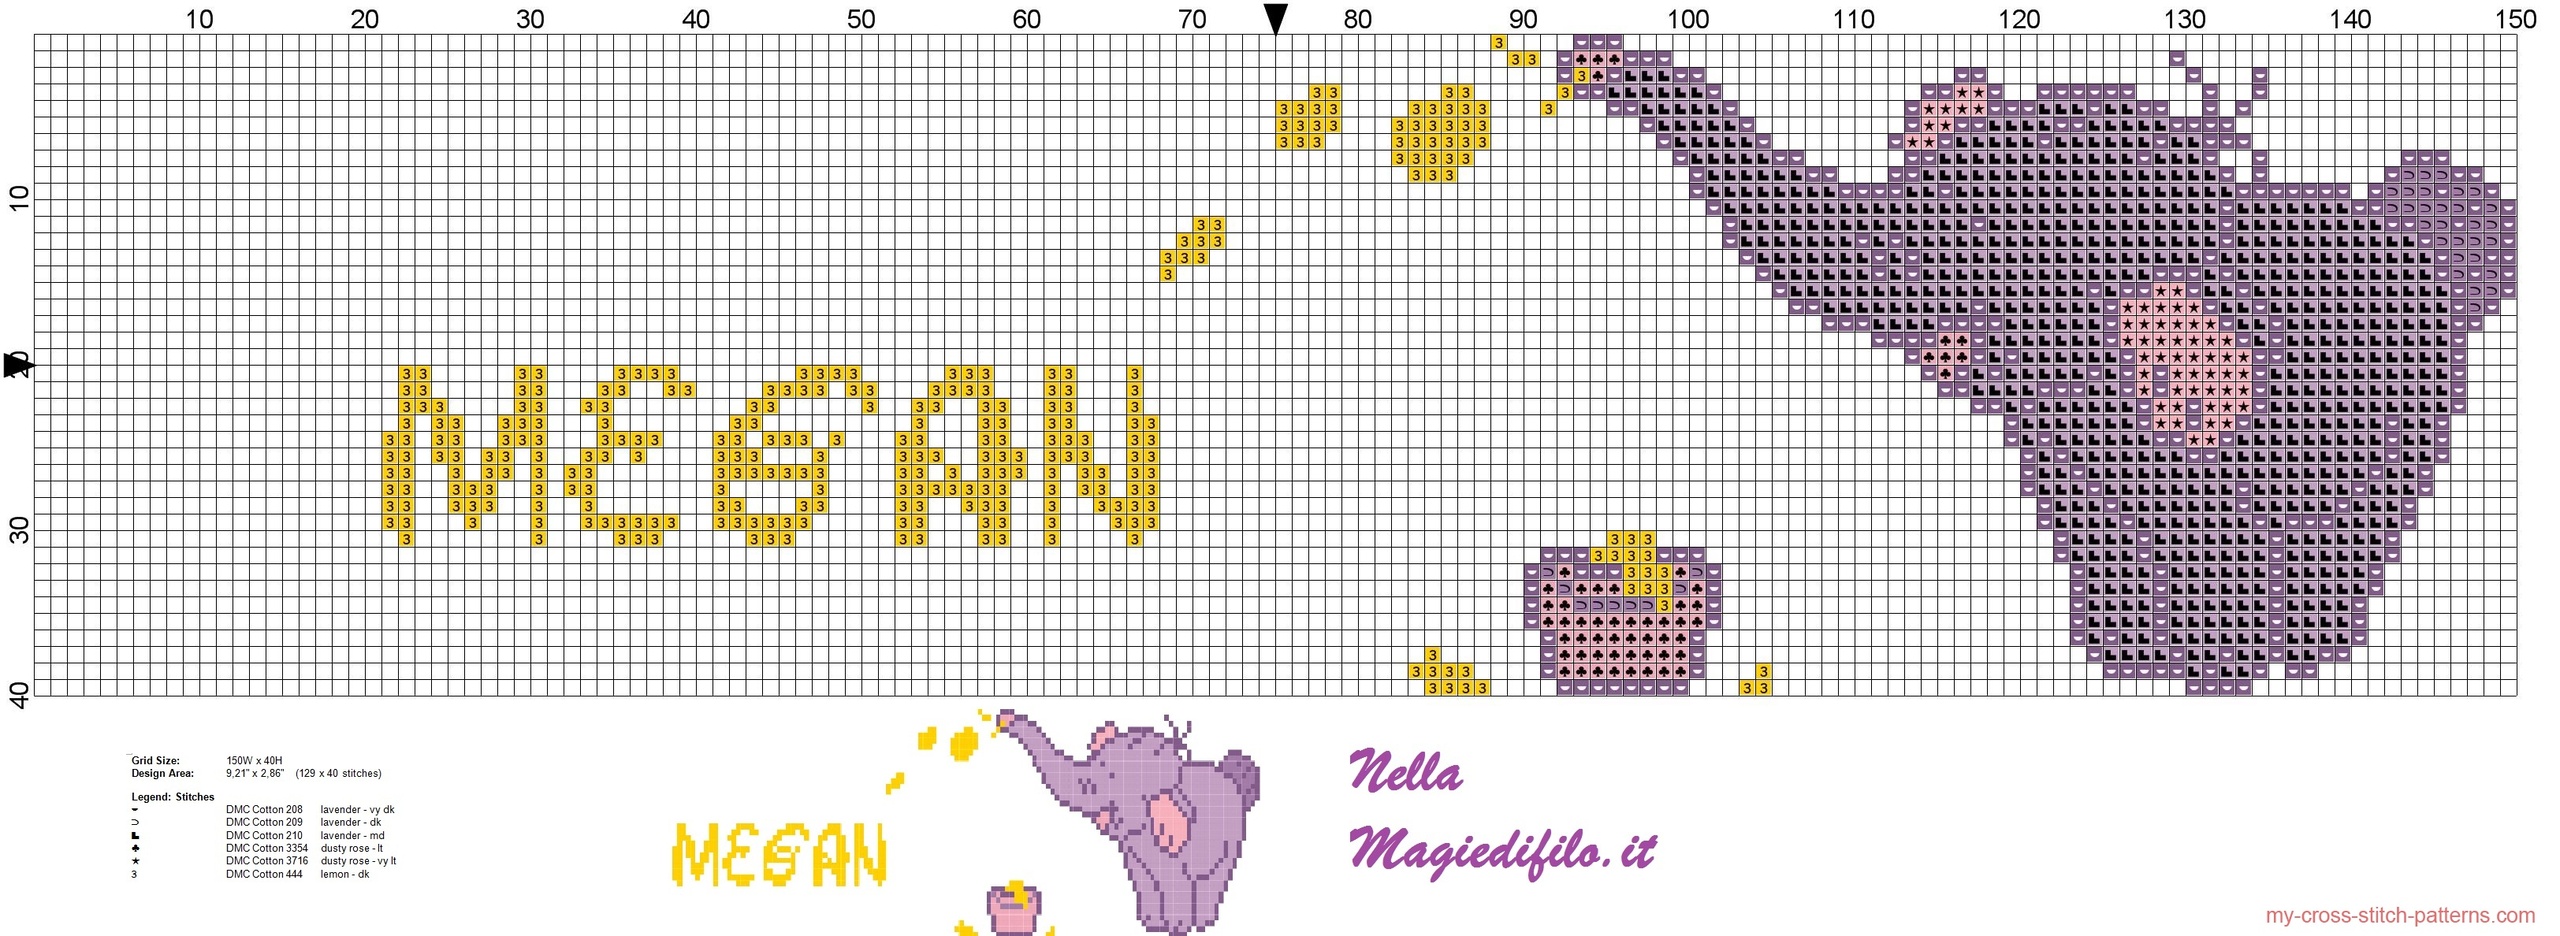 name_megan_with_elephant_